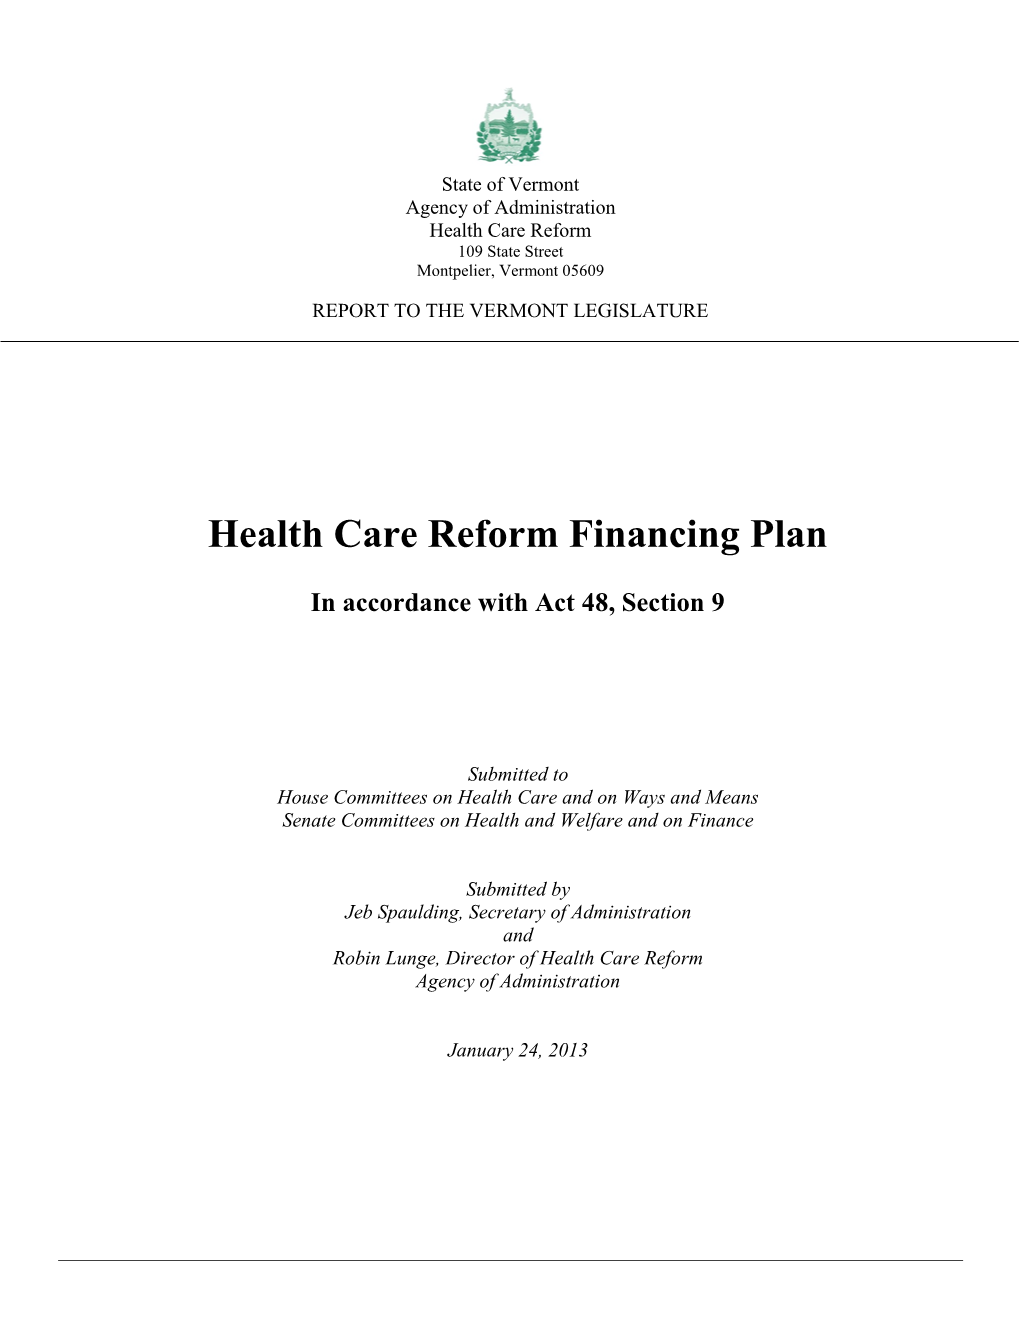 Health Care Reform Financing Plan Act 48 Sec 9 Report to Legislature